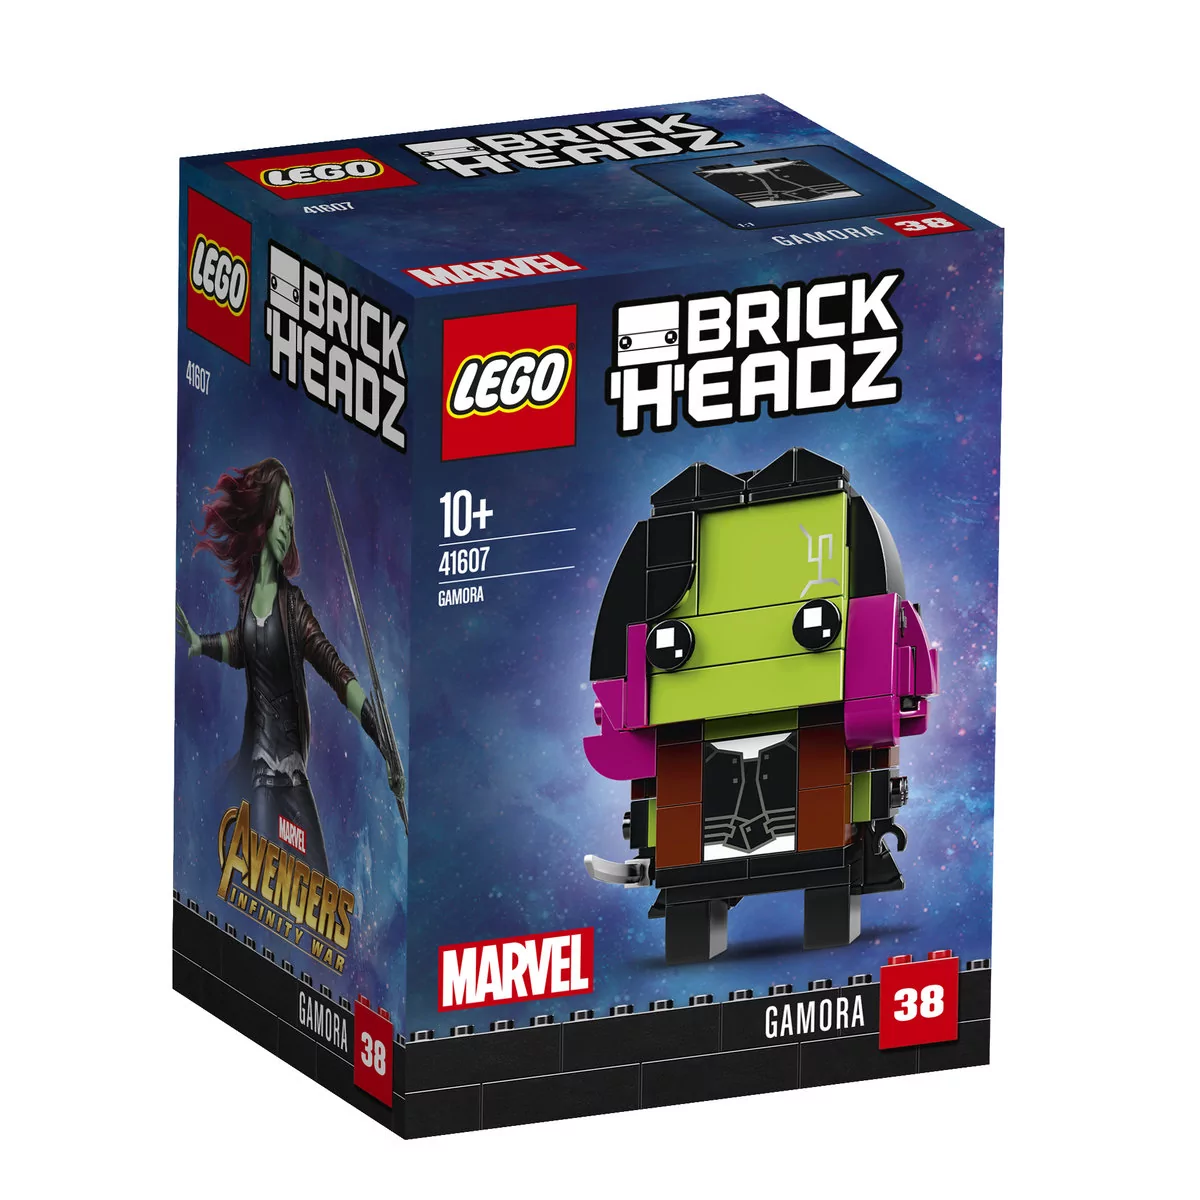 LEGO BRICK HEADZ Gamora p6 41607